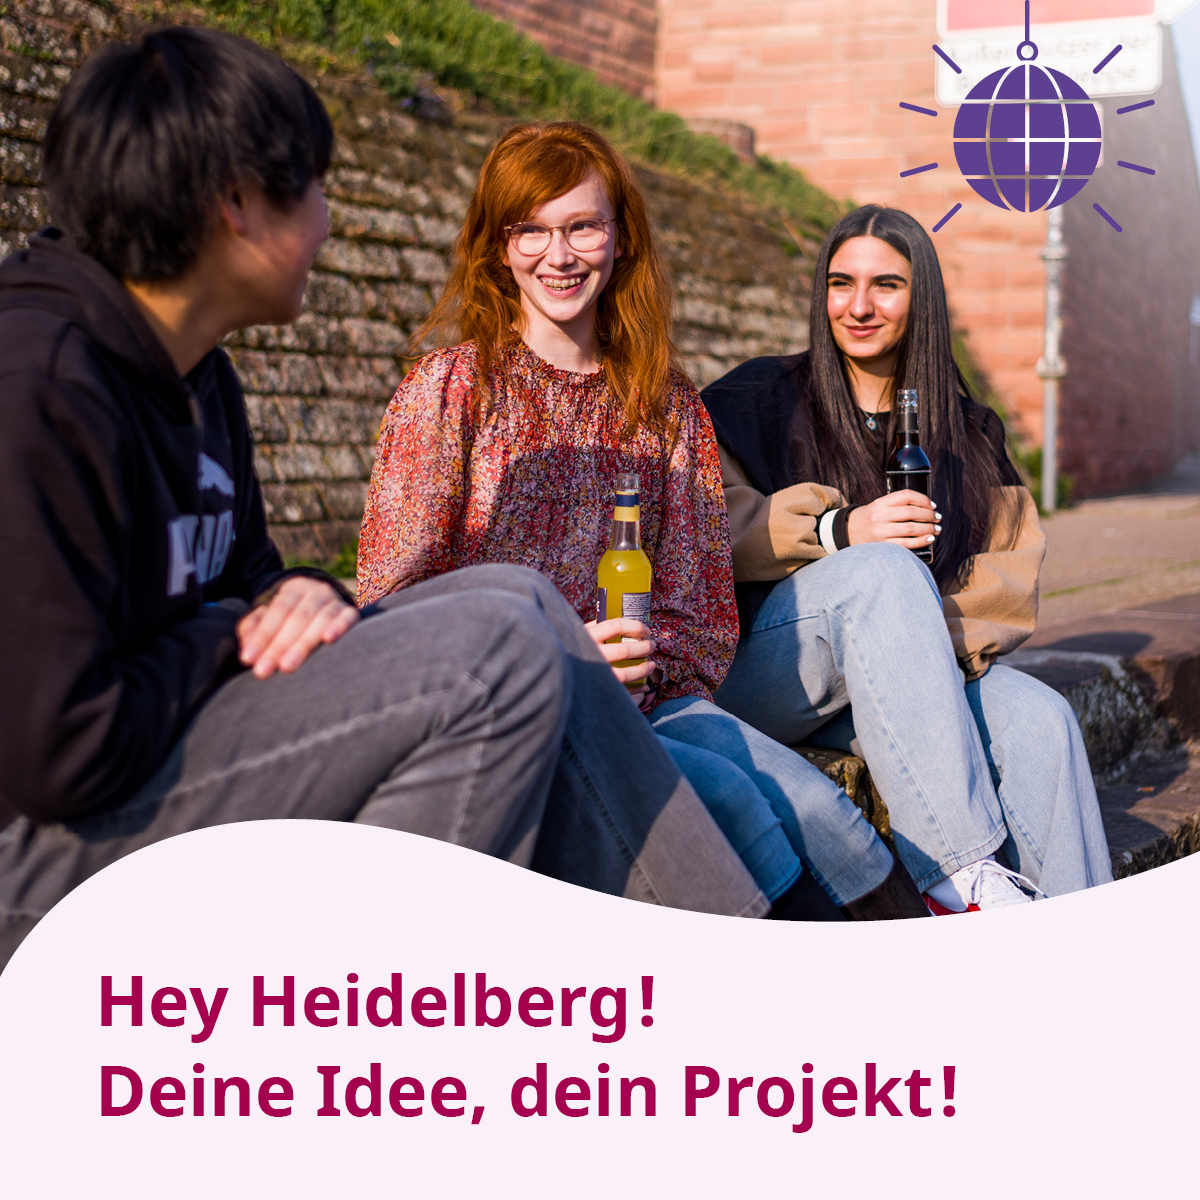 Hey Heidelberg – deine Idee, dein Projekt! 